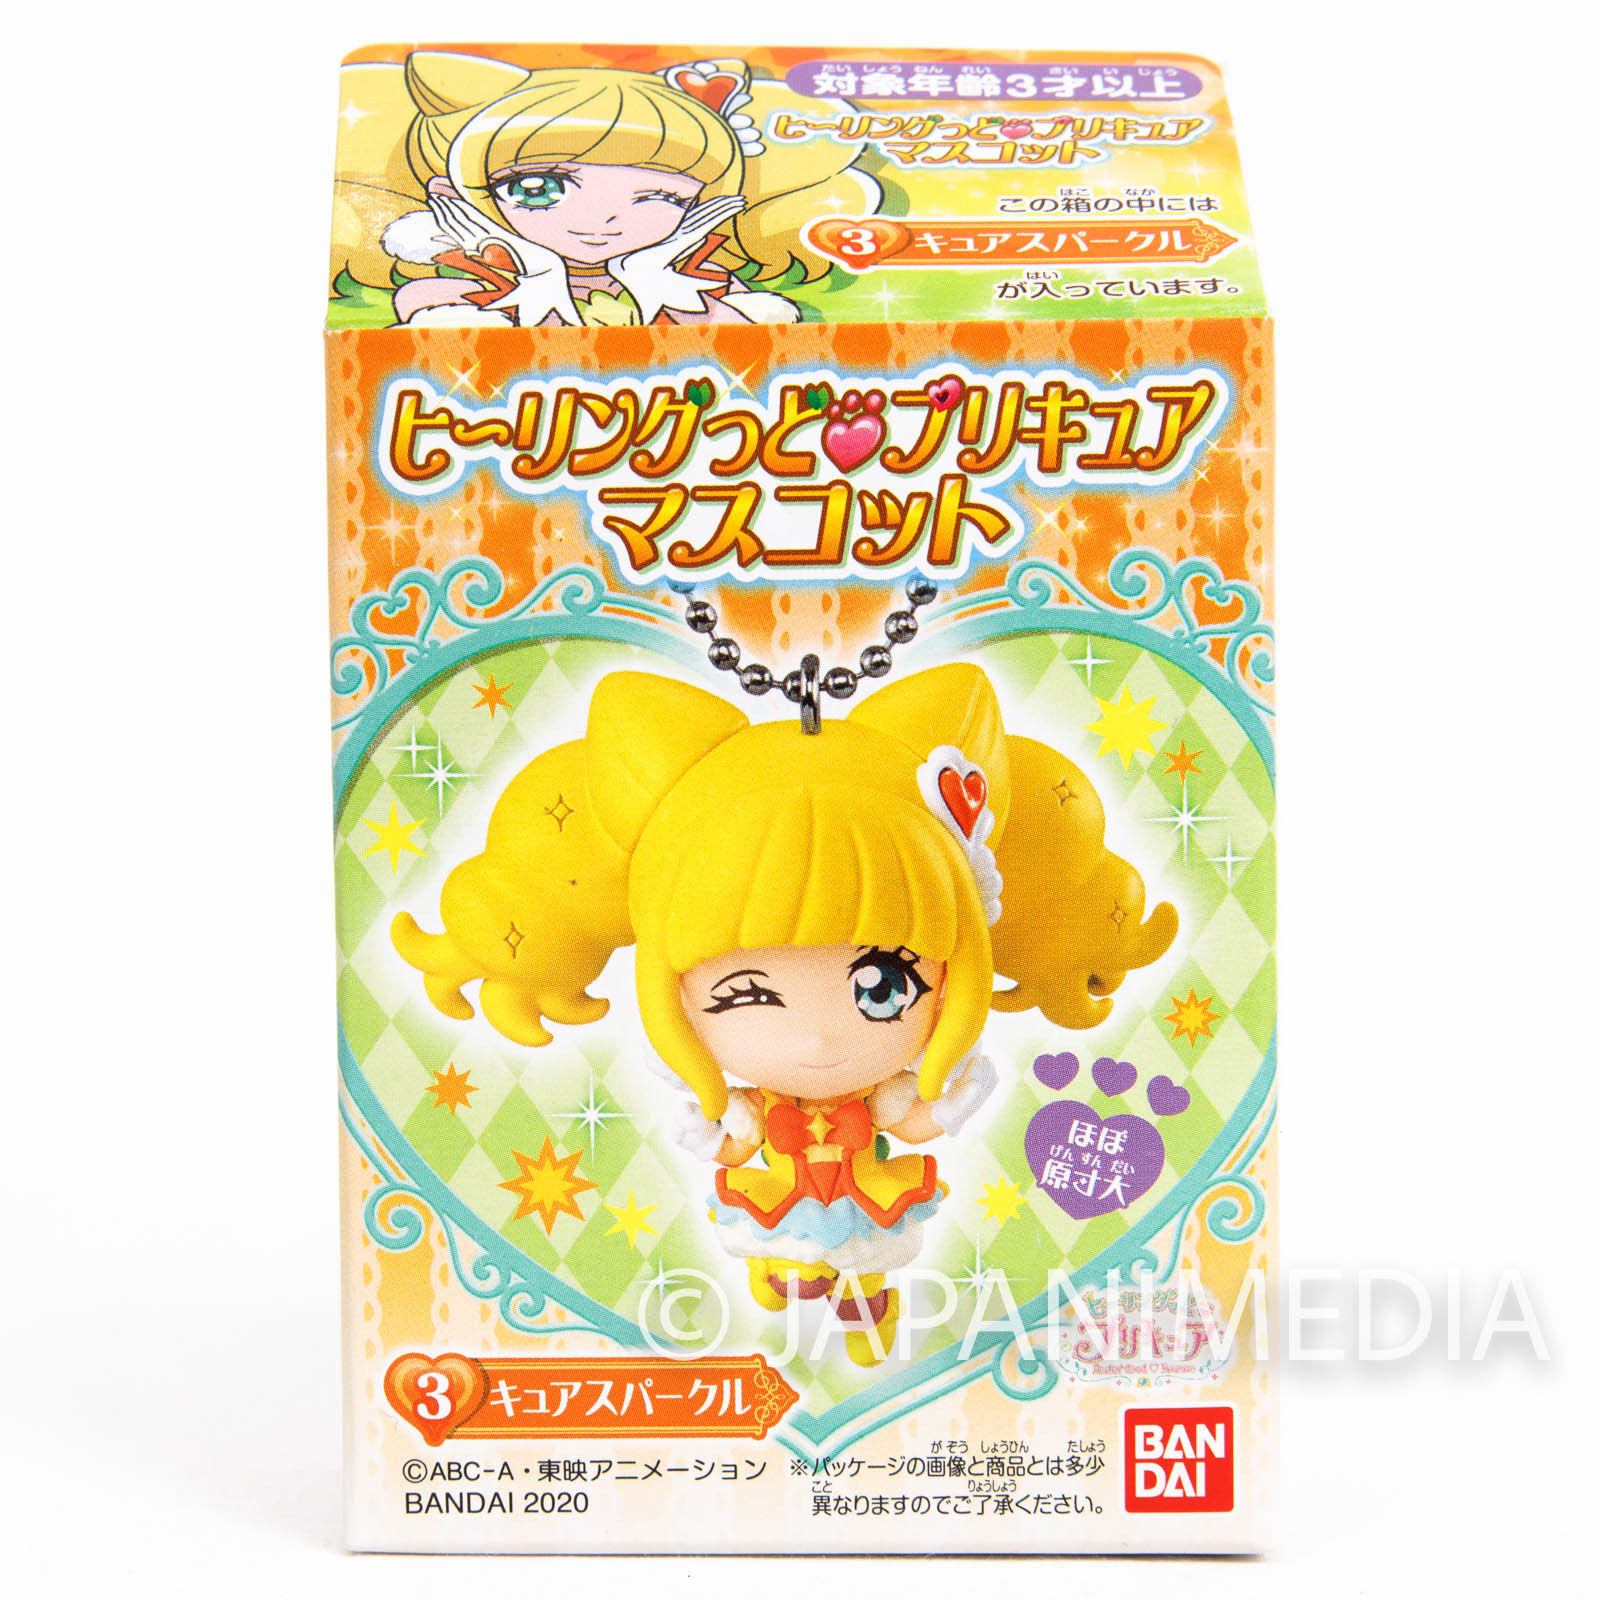 Healin' Good Pretty Cure Cure Sparkle PreCure Mascot Figure Ball Keychain JAPAN ANIME